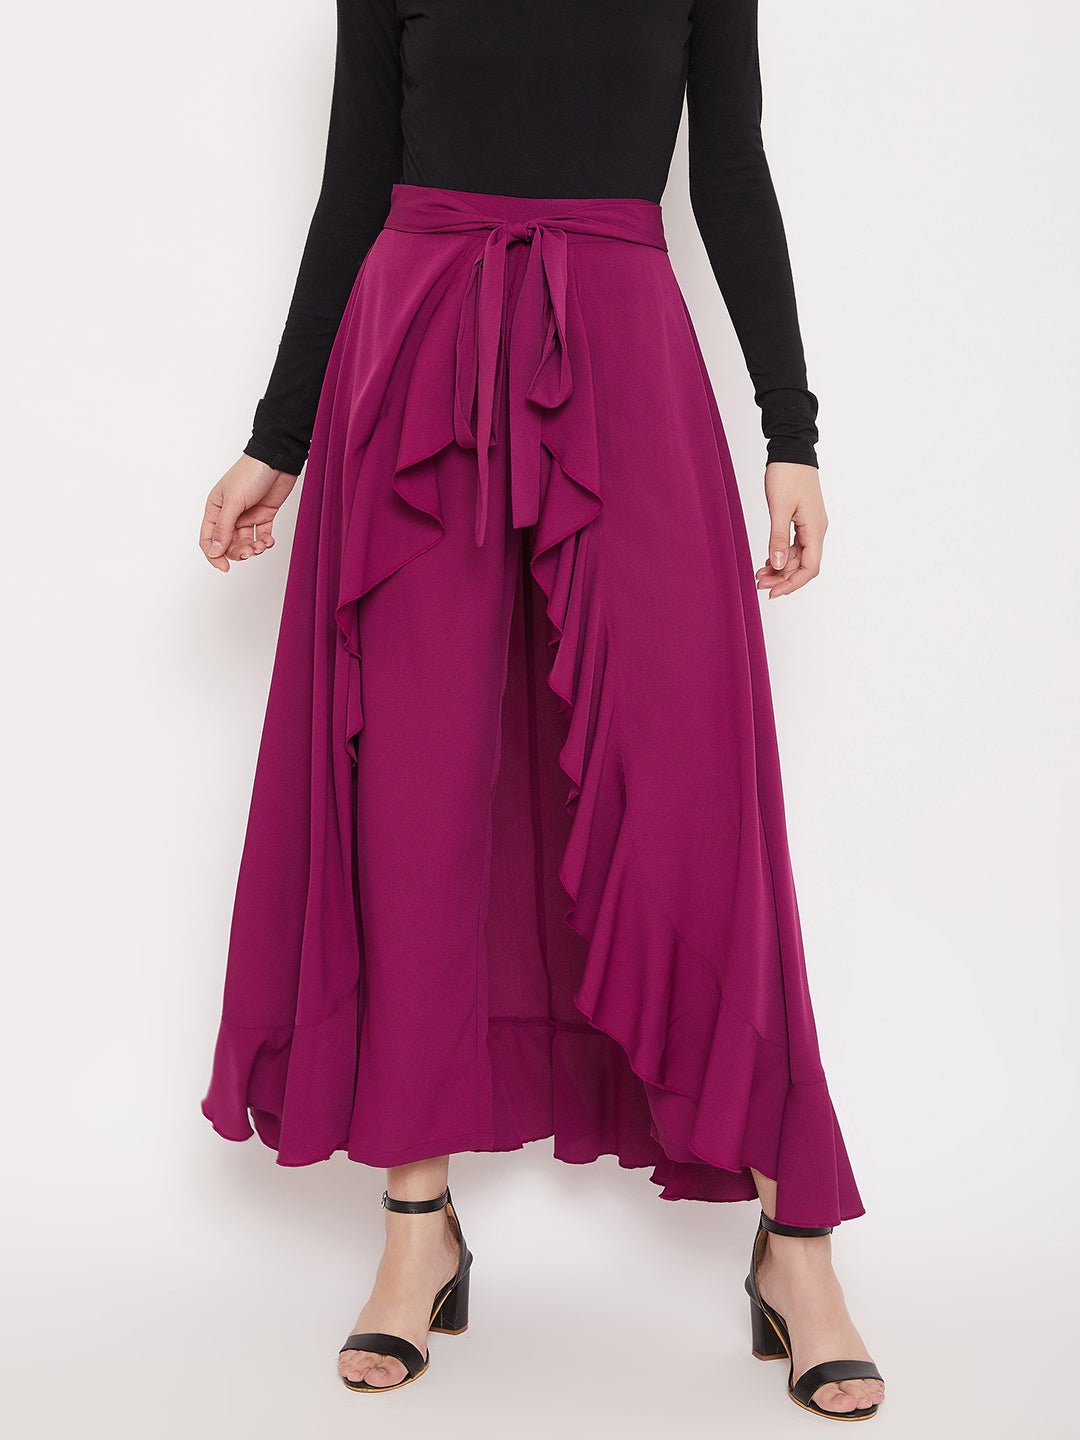 Folk Republic Women Solid Purple Waist Tie-Up Ruffled Maxi Skirt With Attached Trousers - #folk republic#